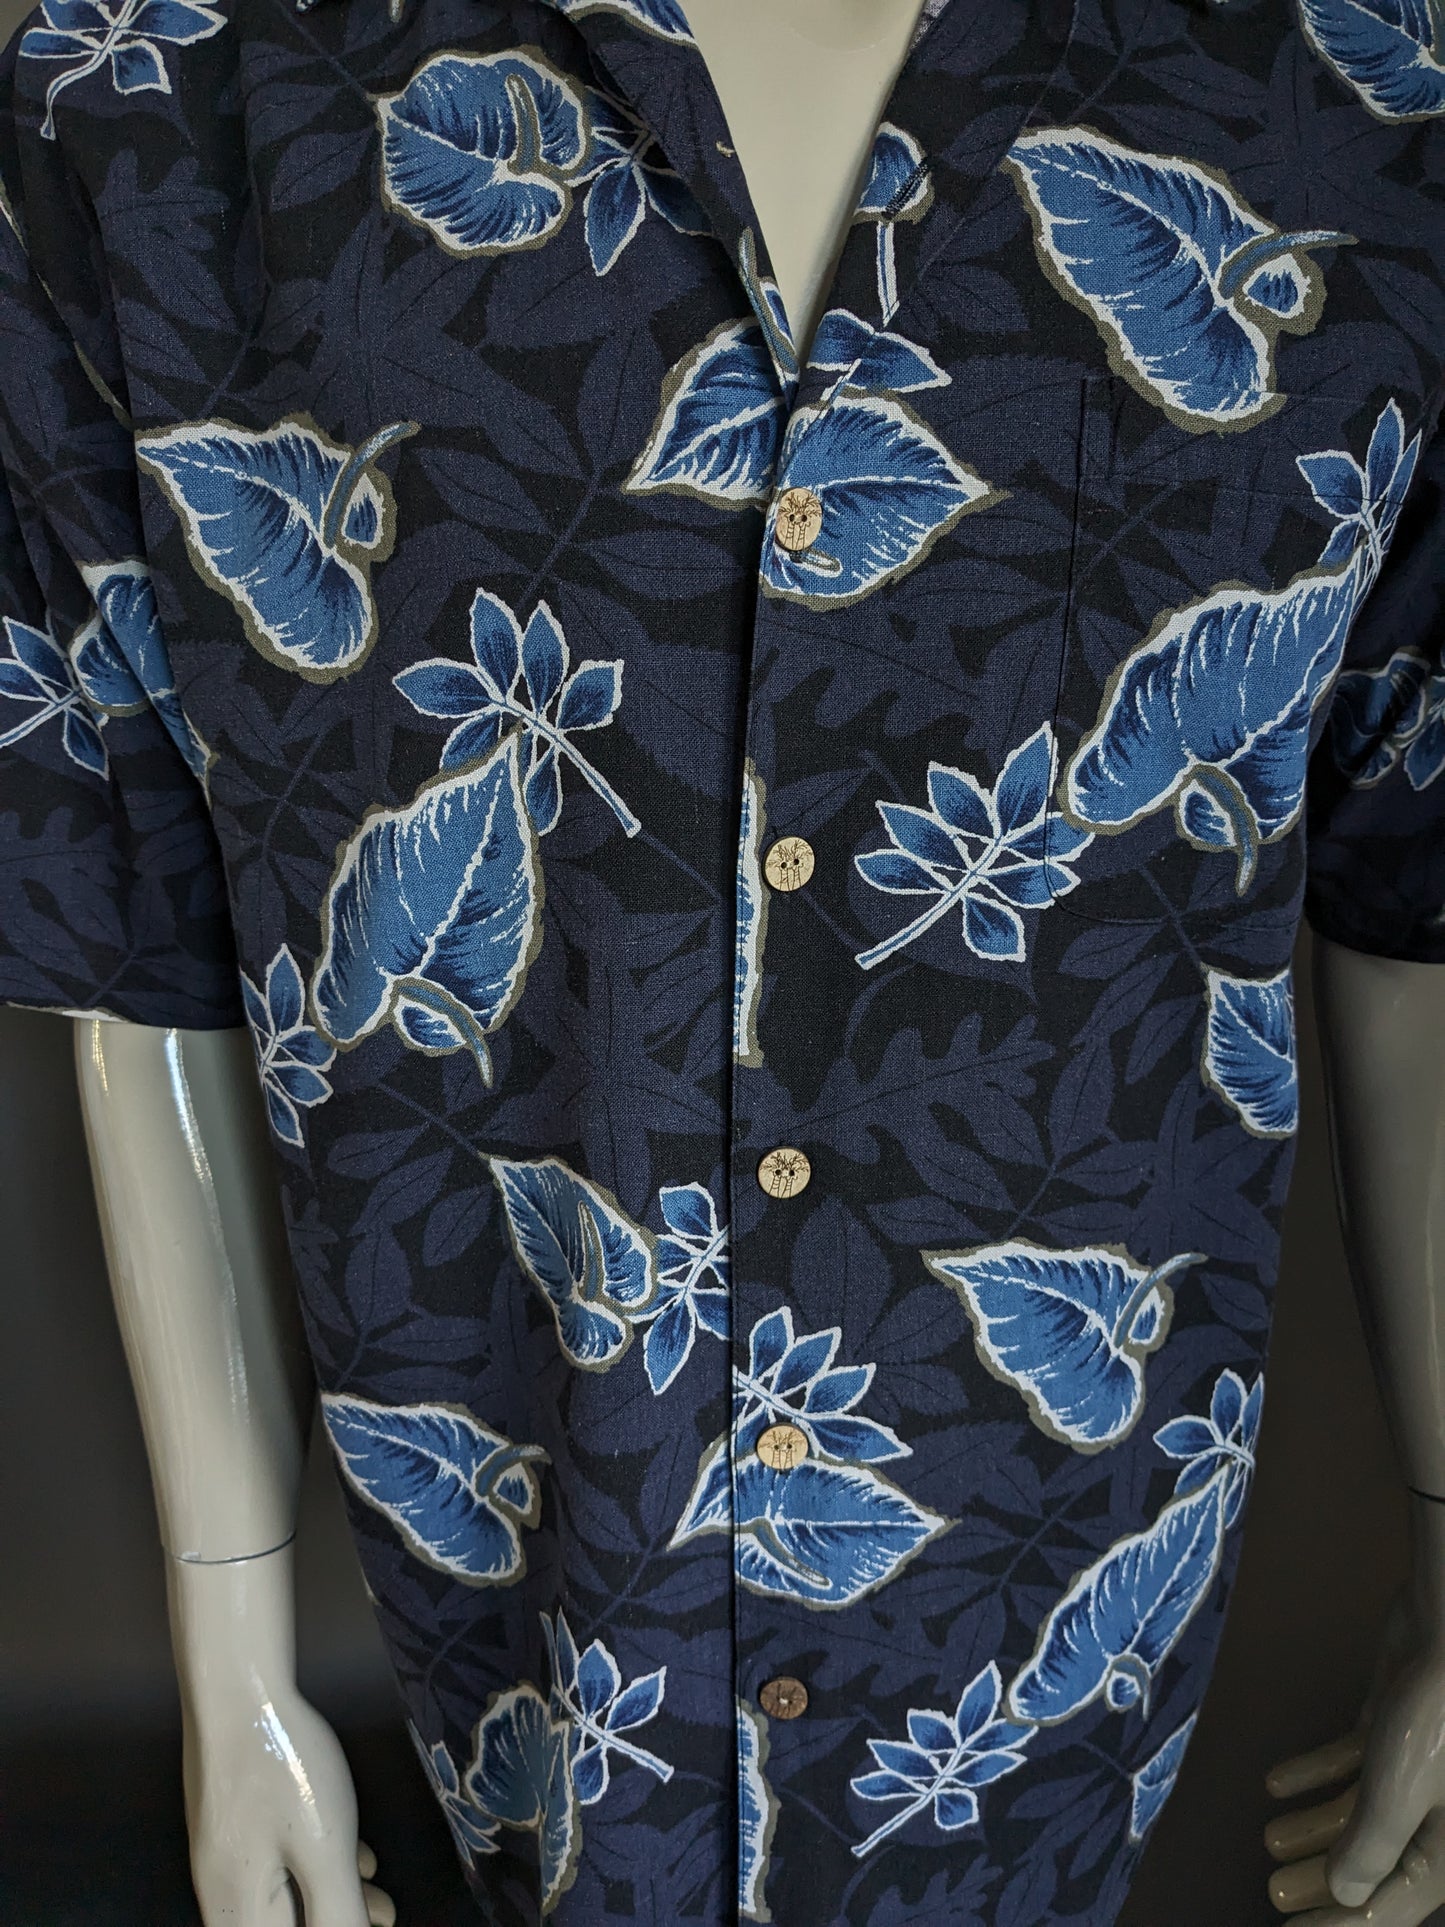 Paradise Blue Silk Hawaii Camisa Manga corta. Motivo de hoja azul. Tamaño xl. 70% de seda.